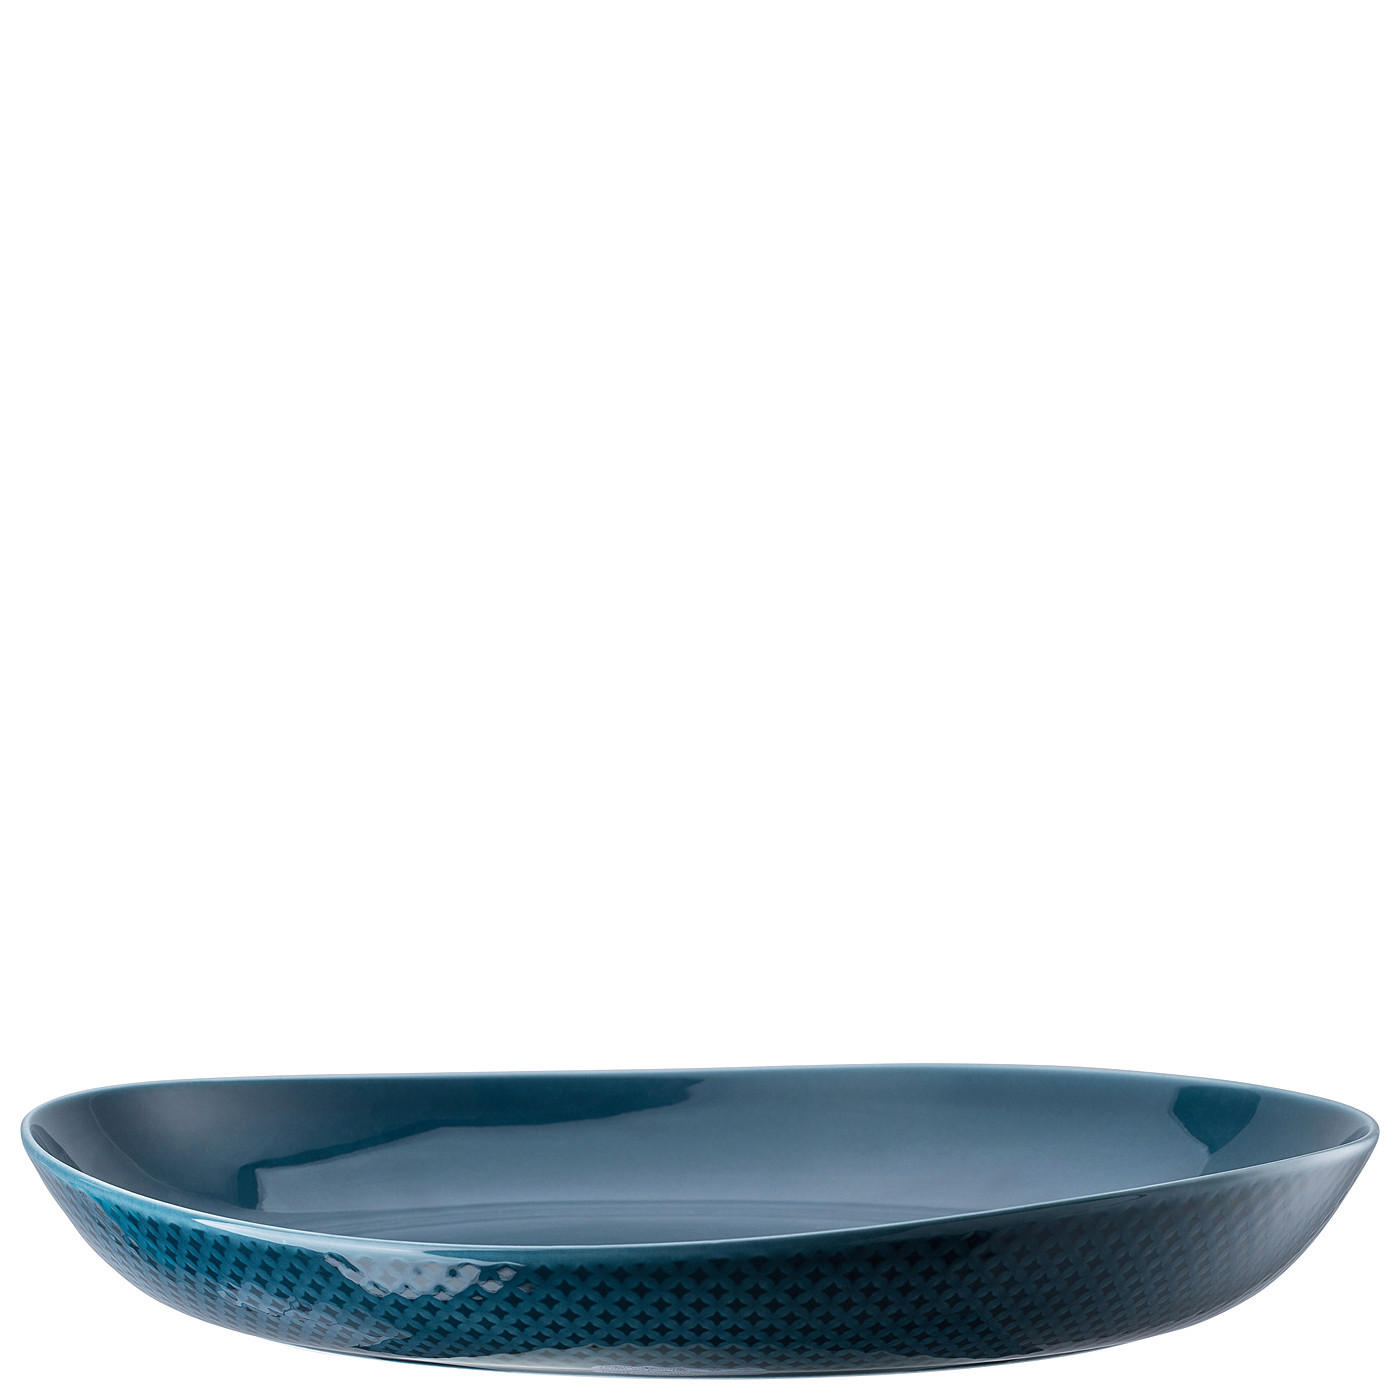 TELLER Junto Ocean Blue  - Blau, LIFESTYLE, Keramik (32,9/32,1/4,8cm) - Rosenthal